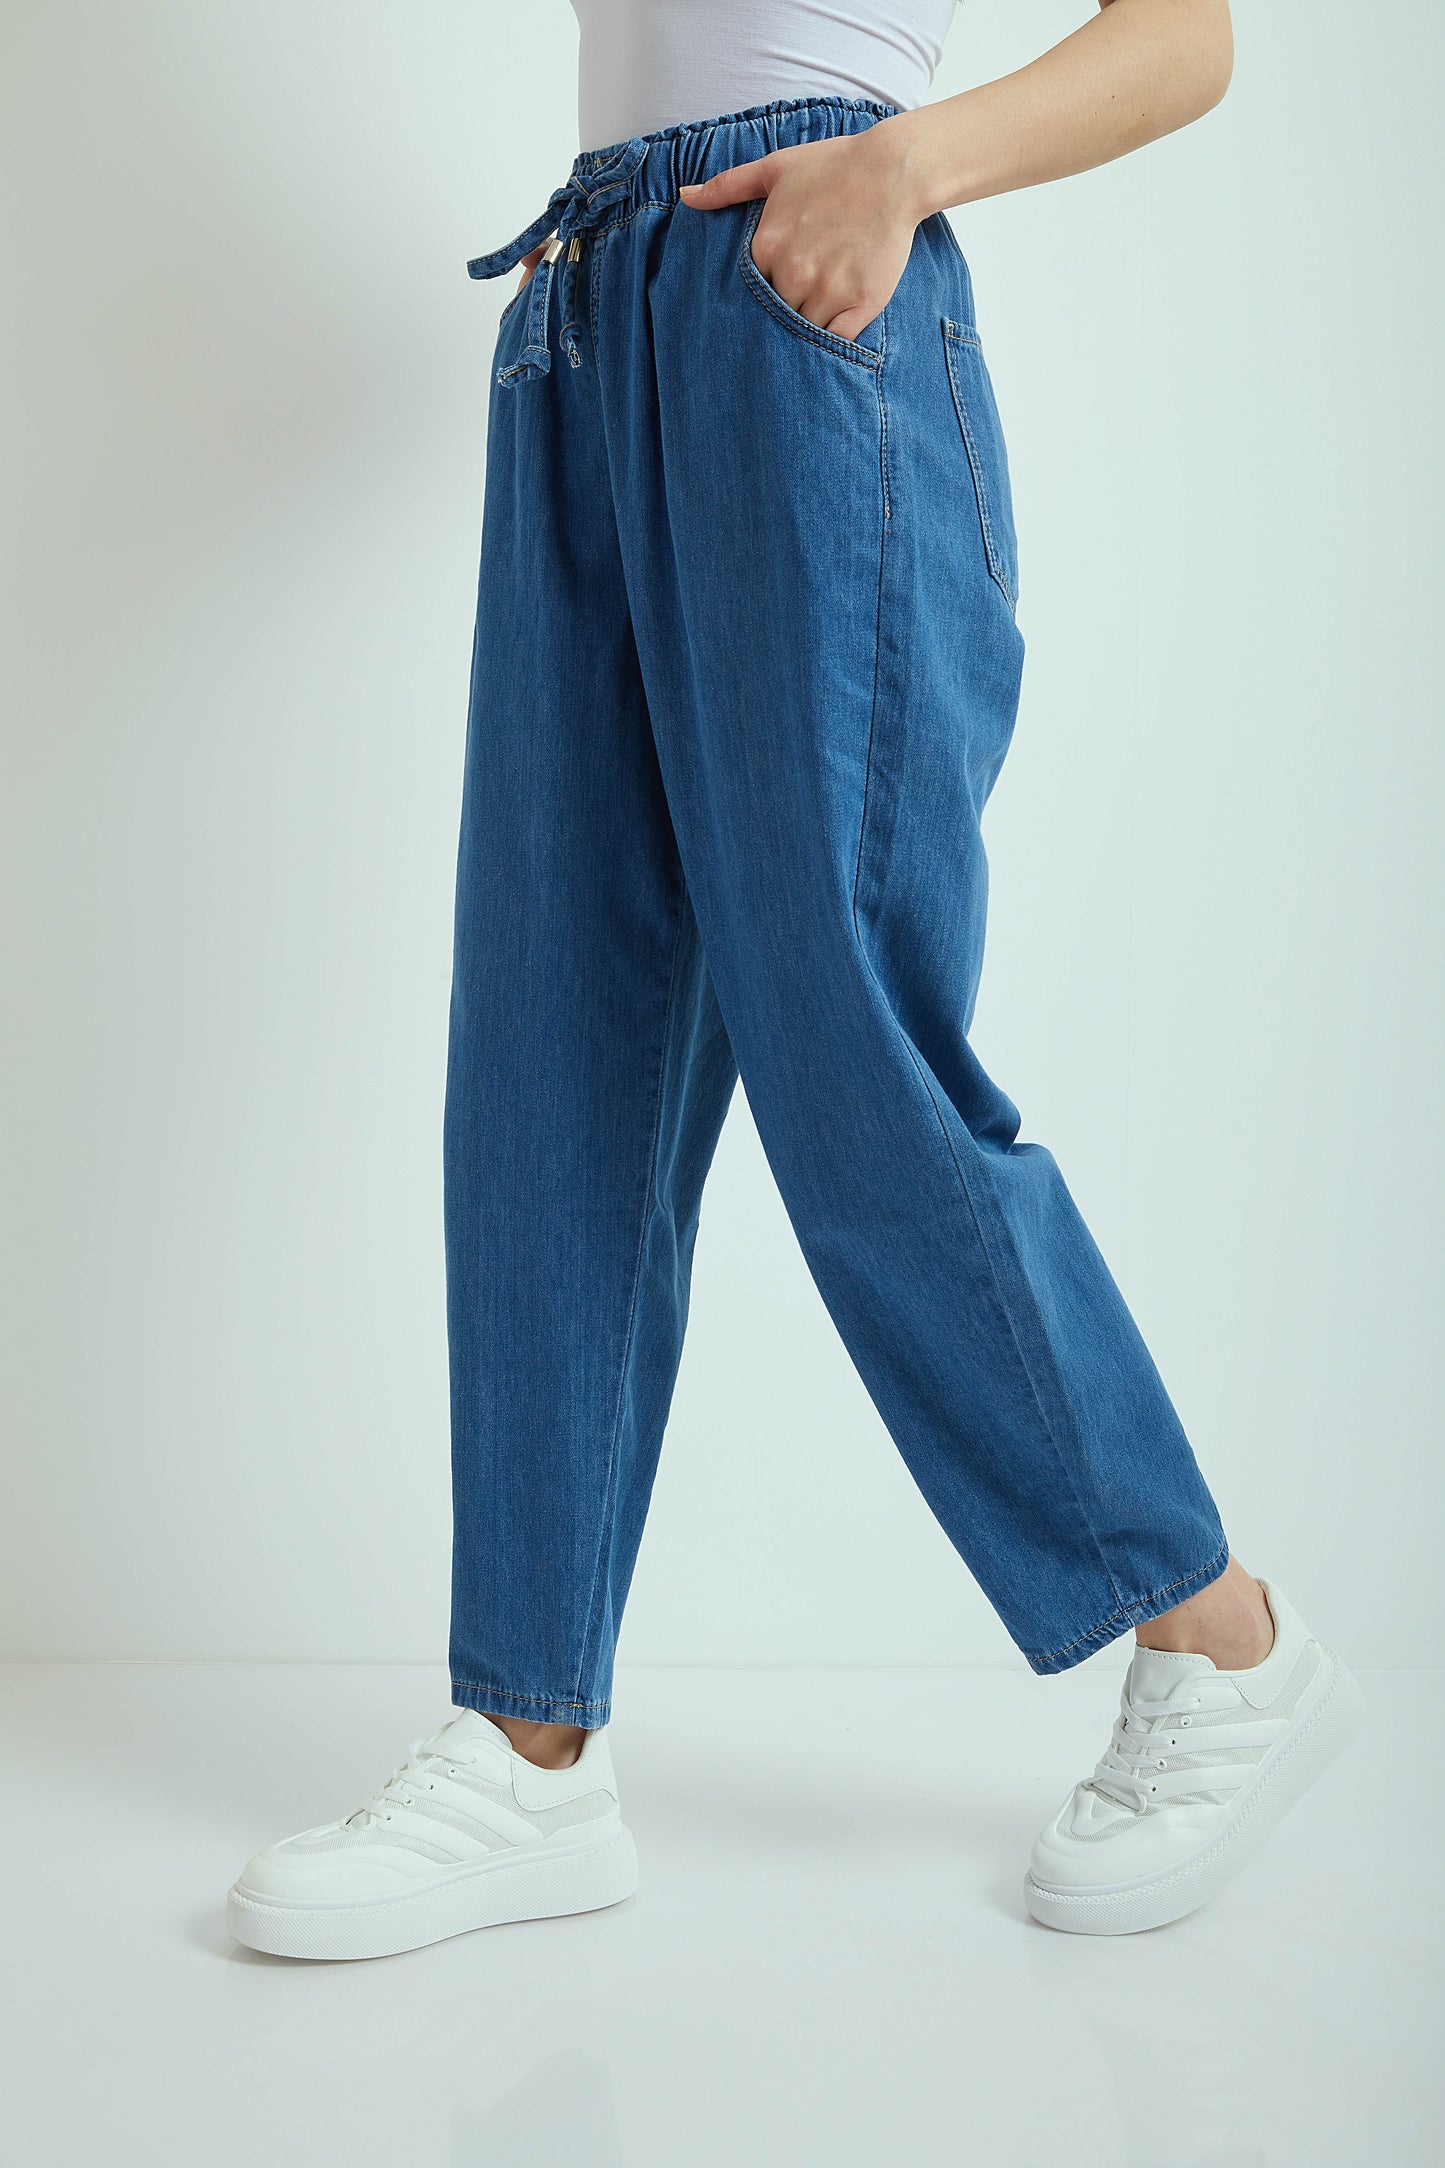 Jeans elastic waist - MoM Fit